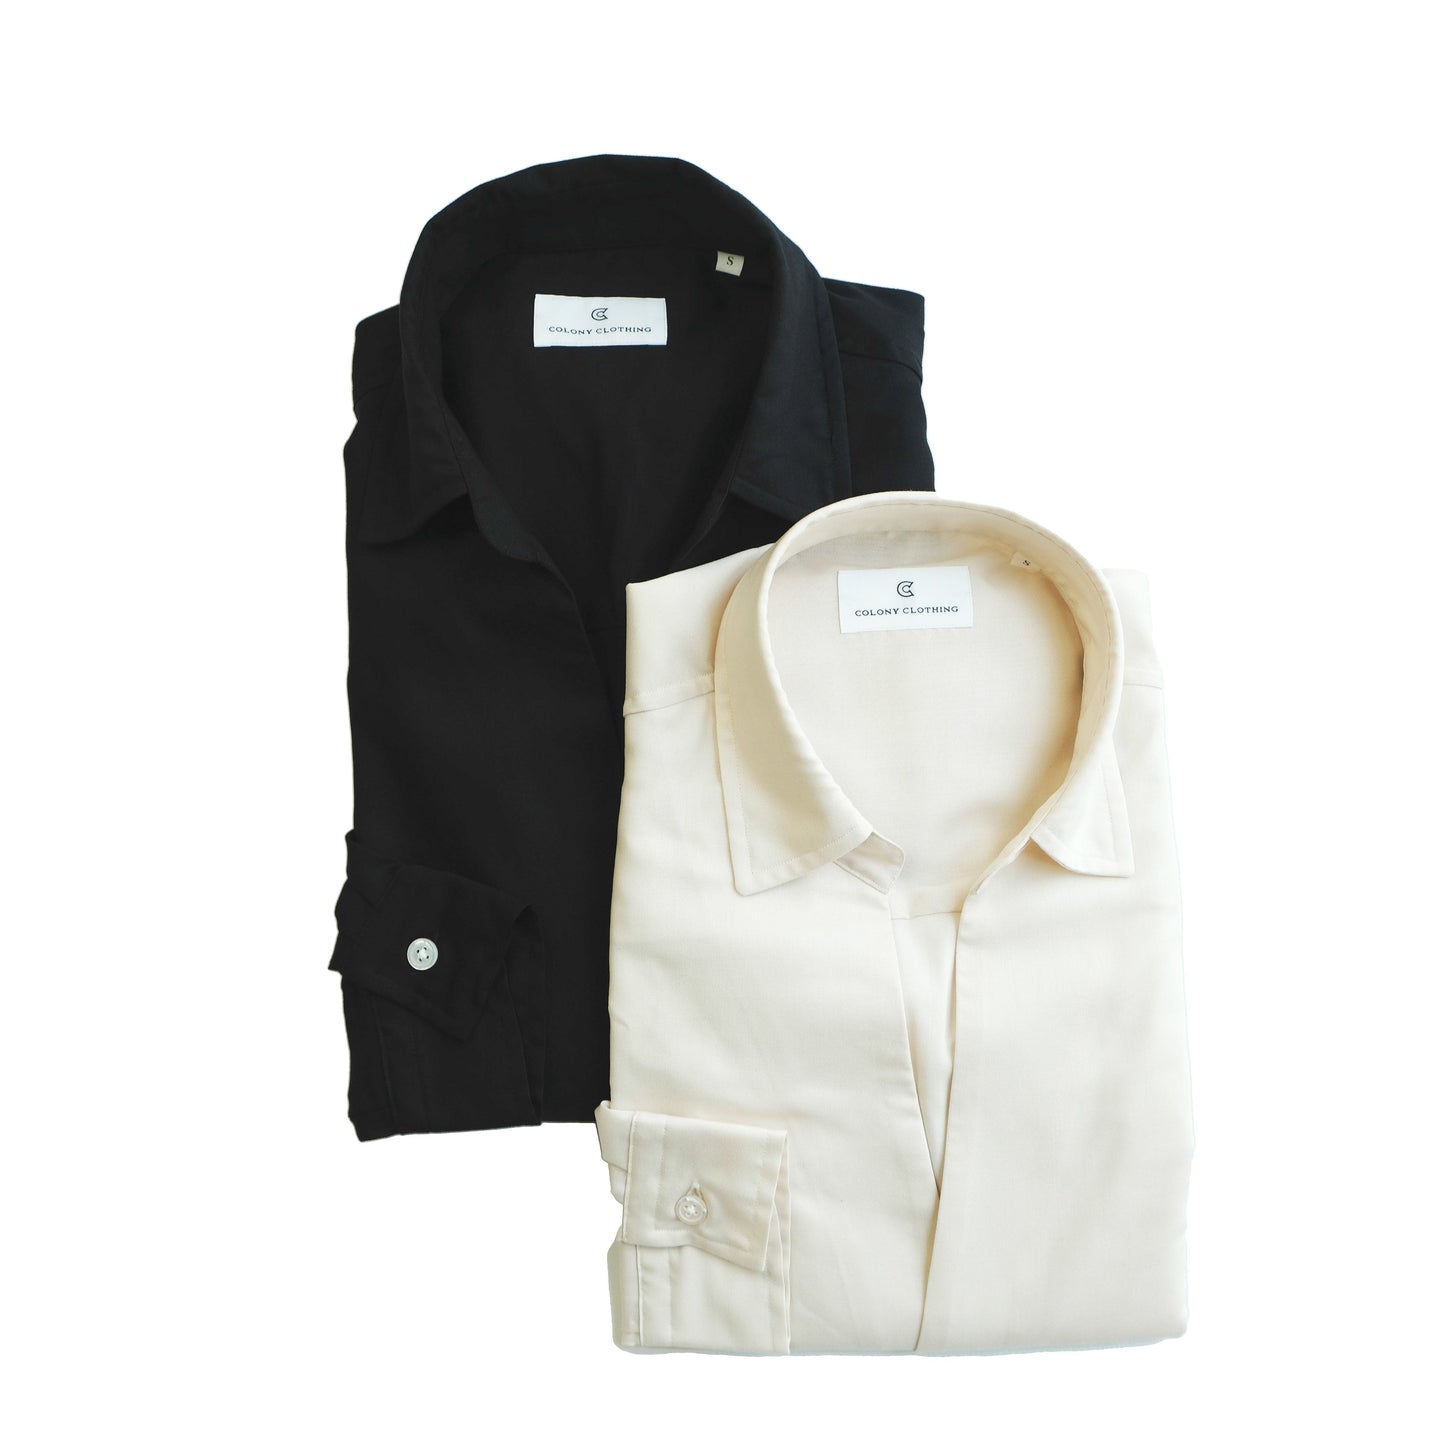 COLONY CLOTHING / レーヨン プールサイドシャツ / CC21-SH02-4